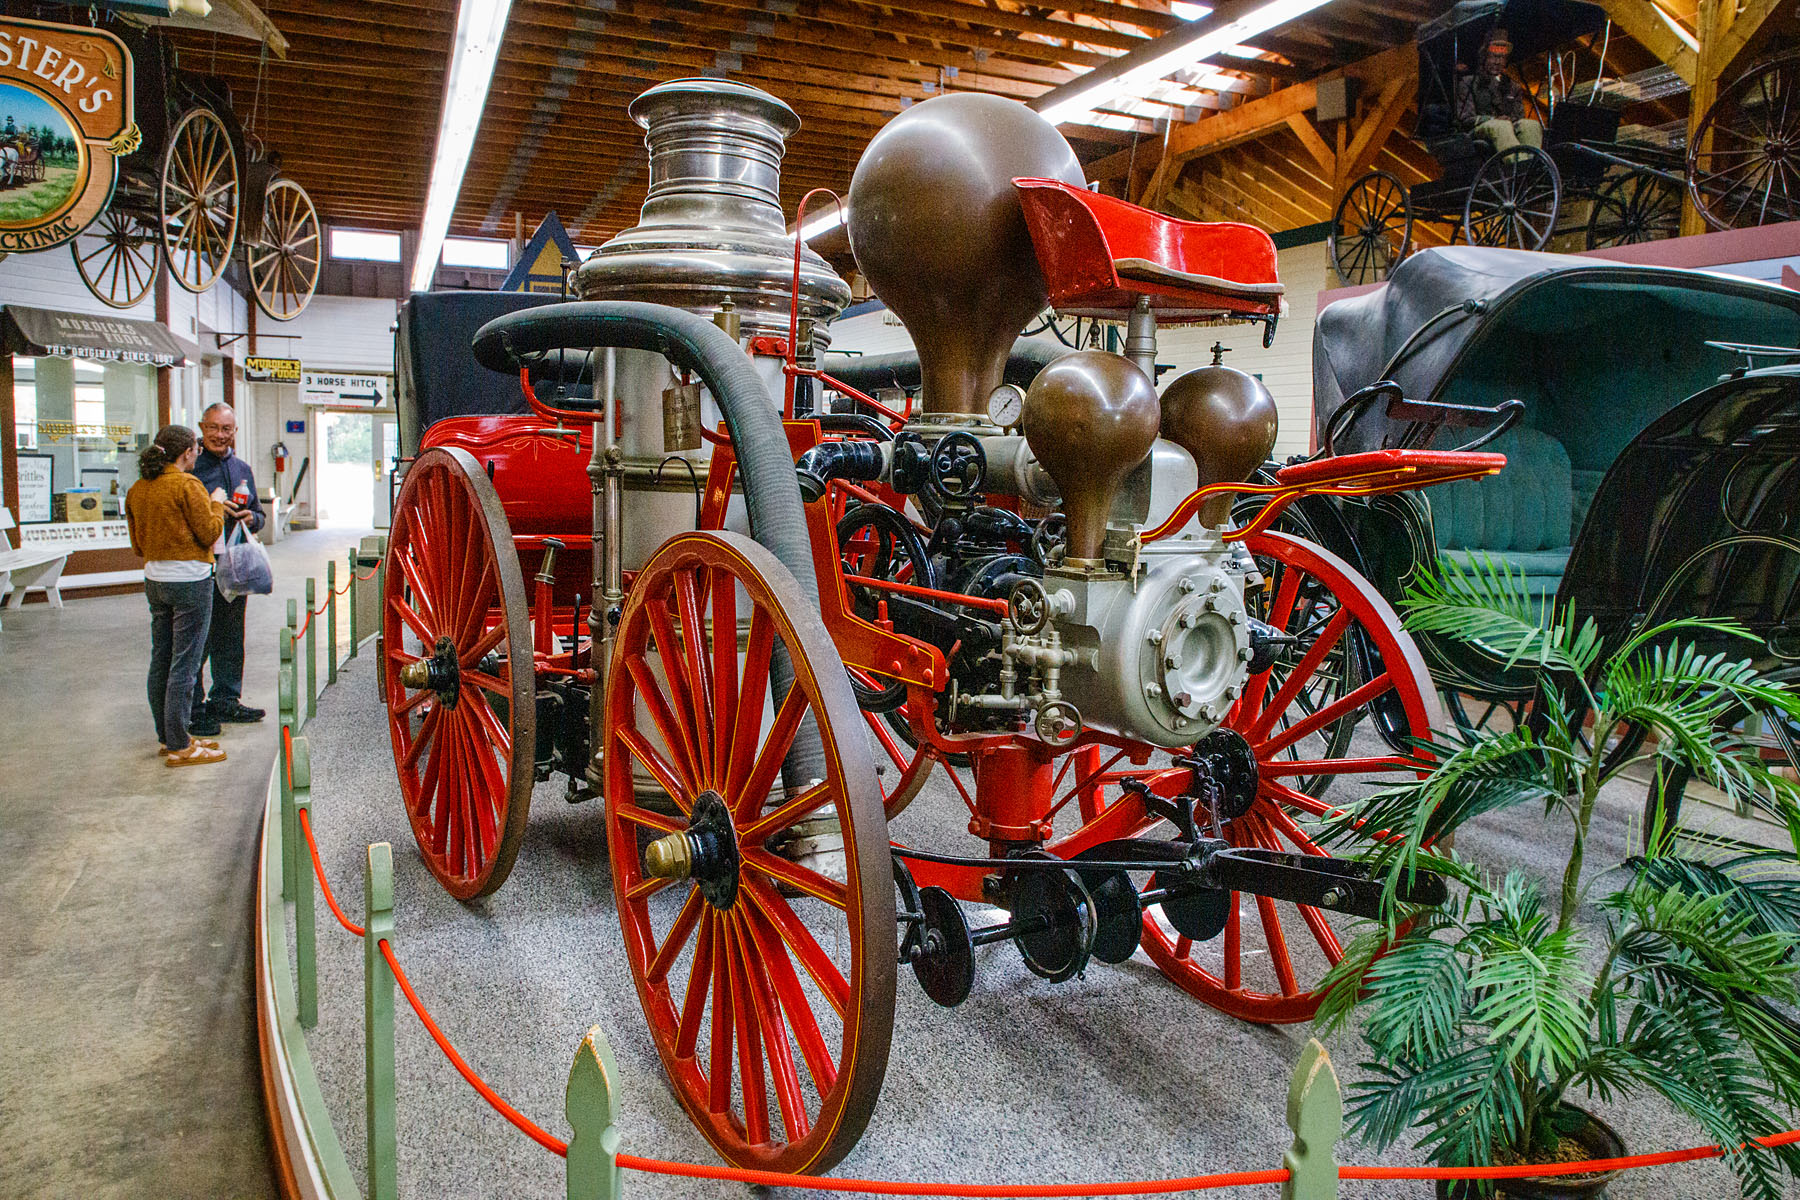 Surrey Hill Carriage Museum, Mackinac Island, Michigan.  Click for next photo.